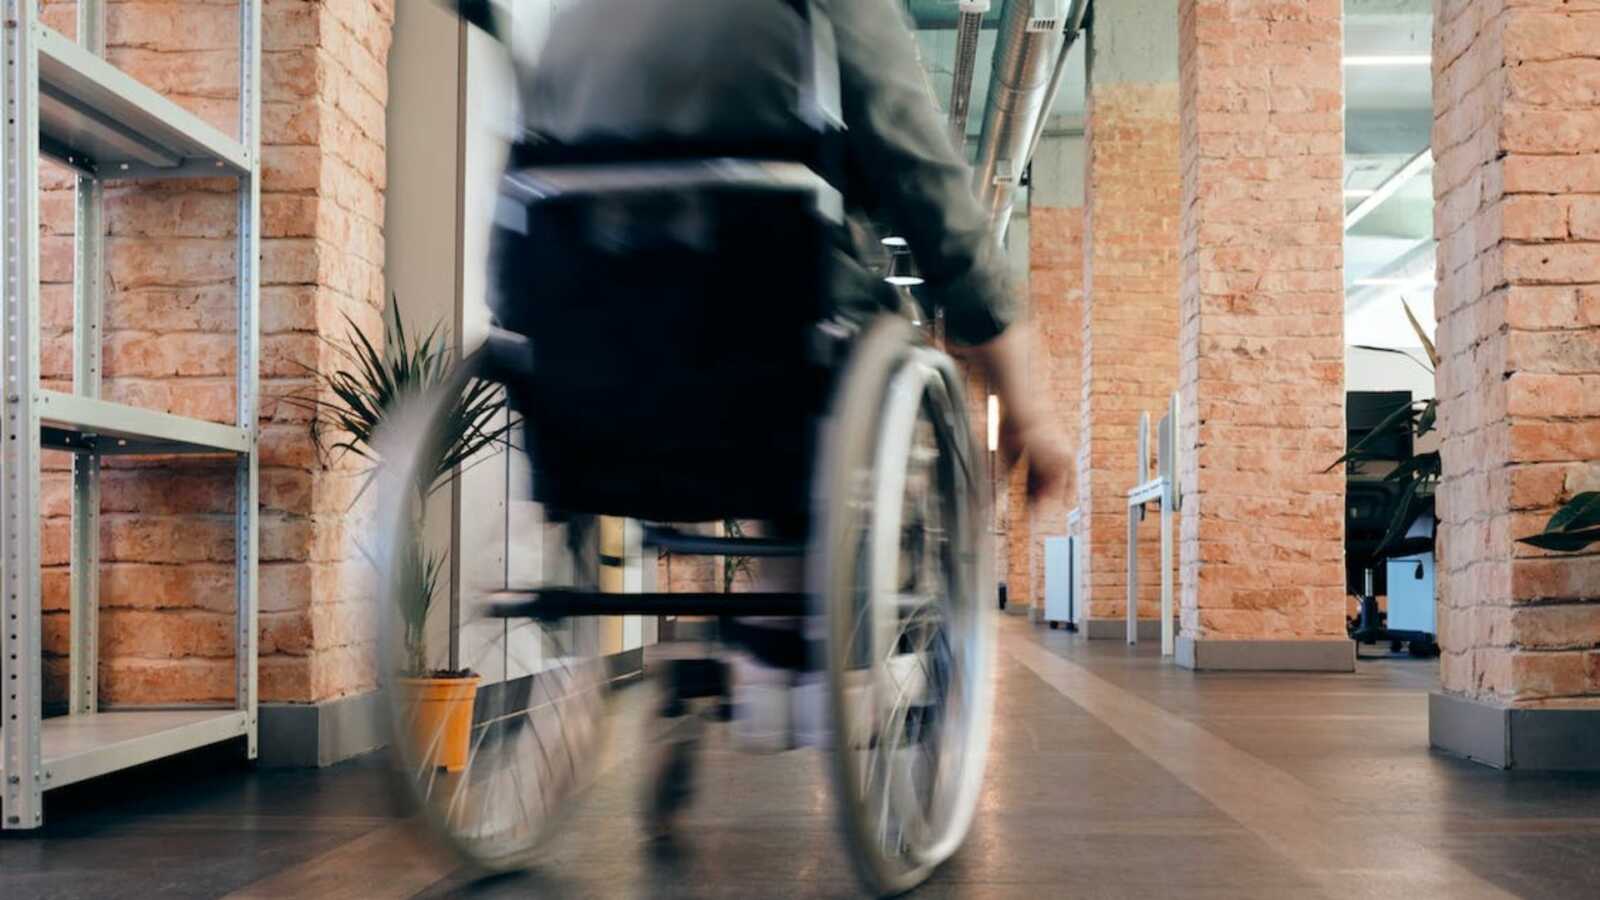 Man rolling in wheelchair down hallway